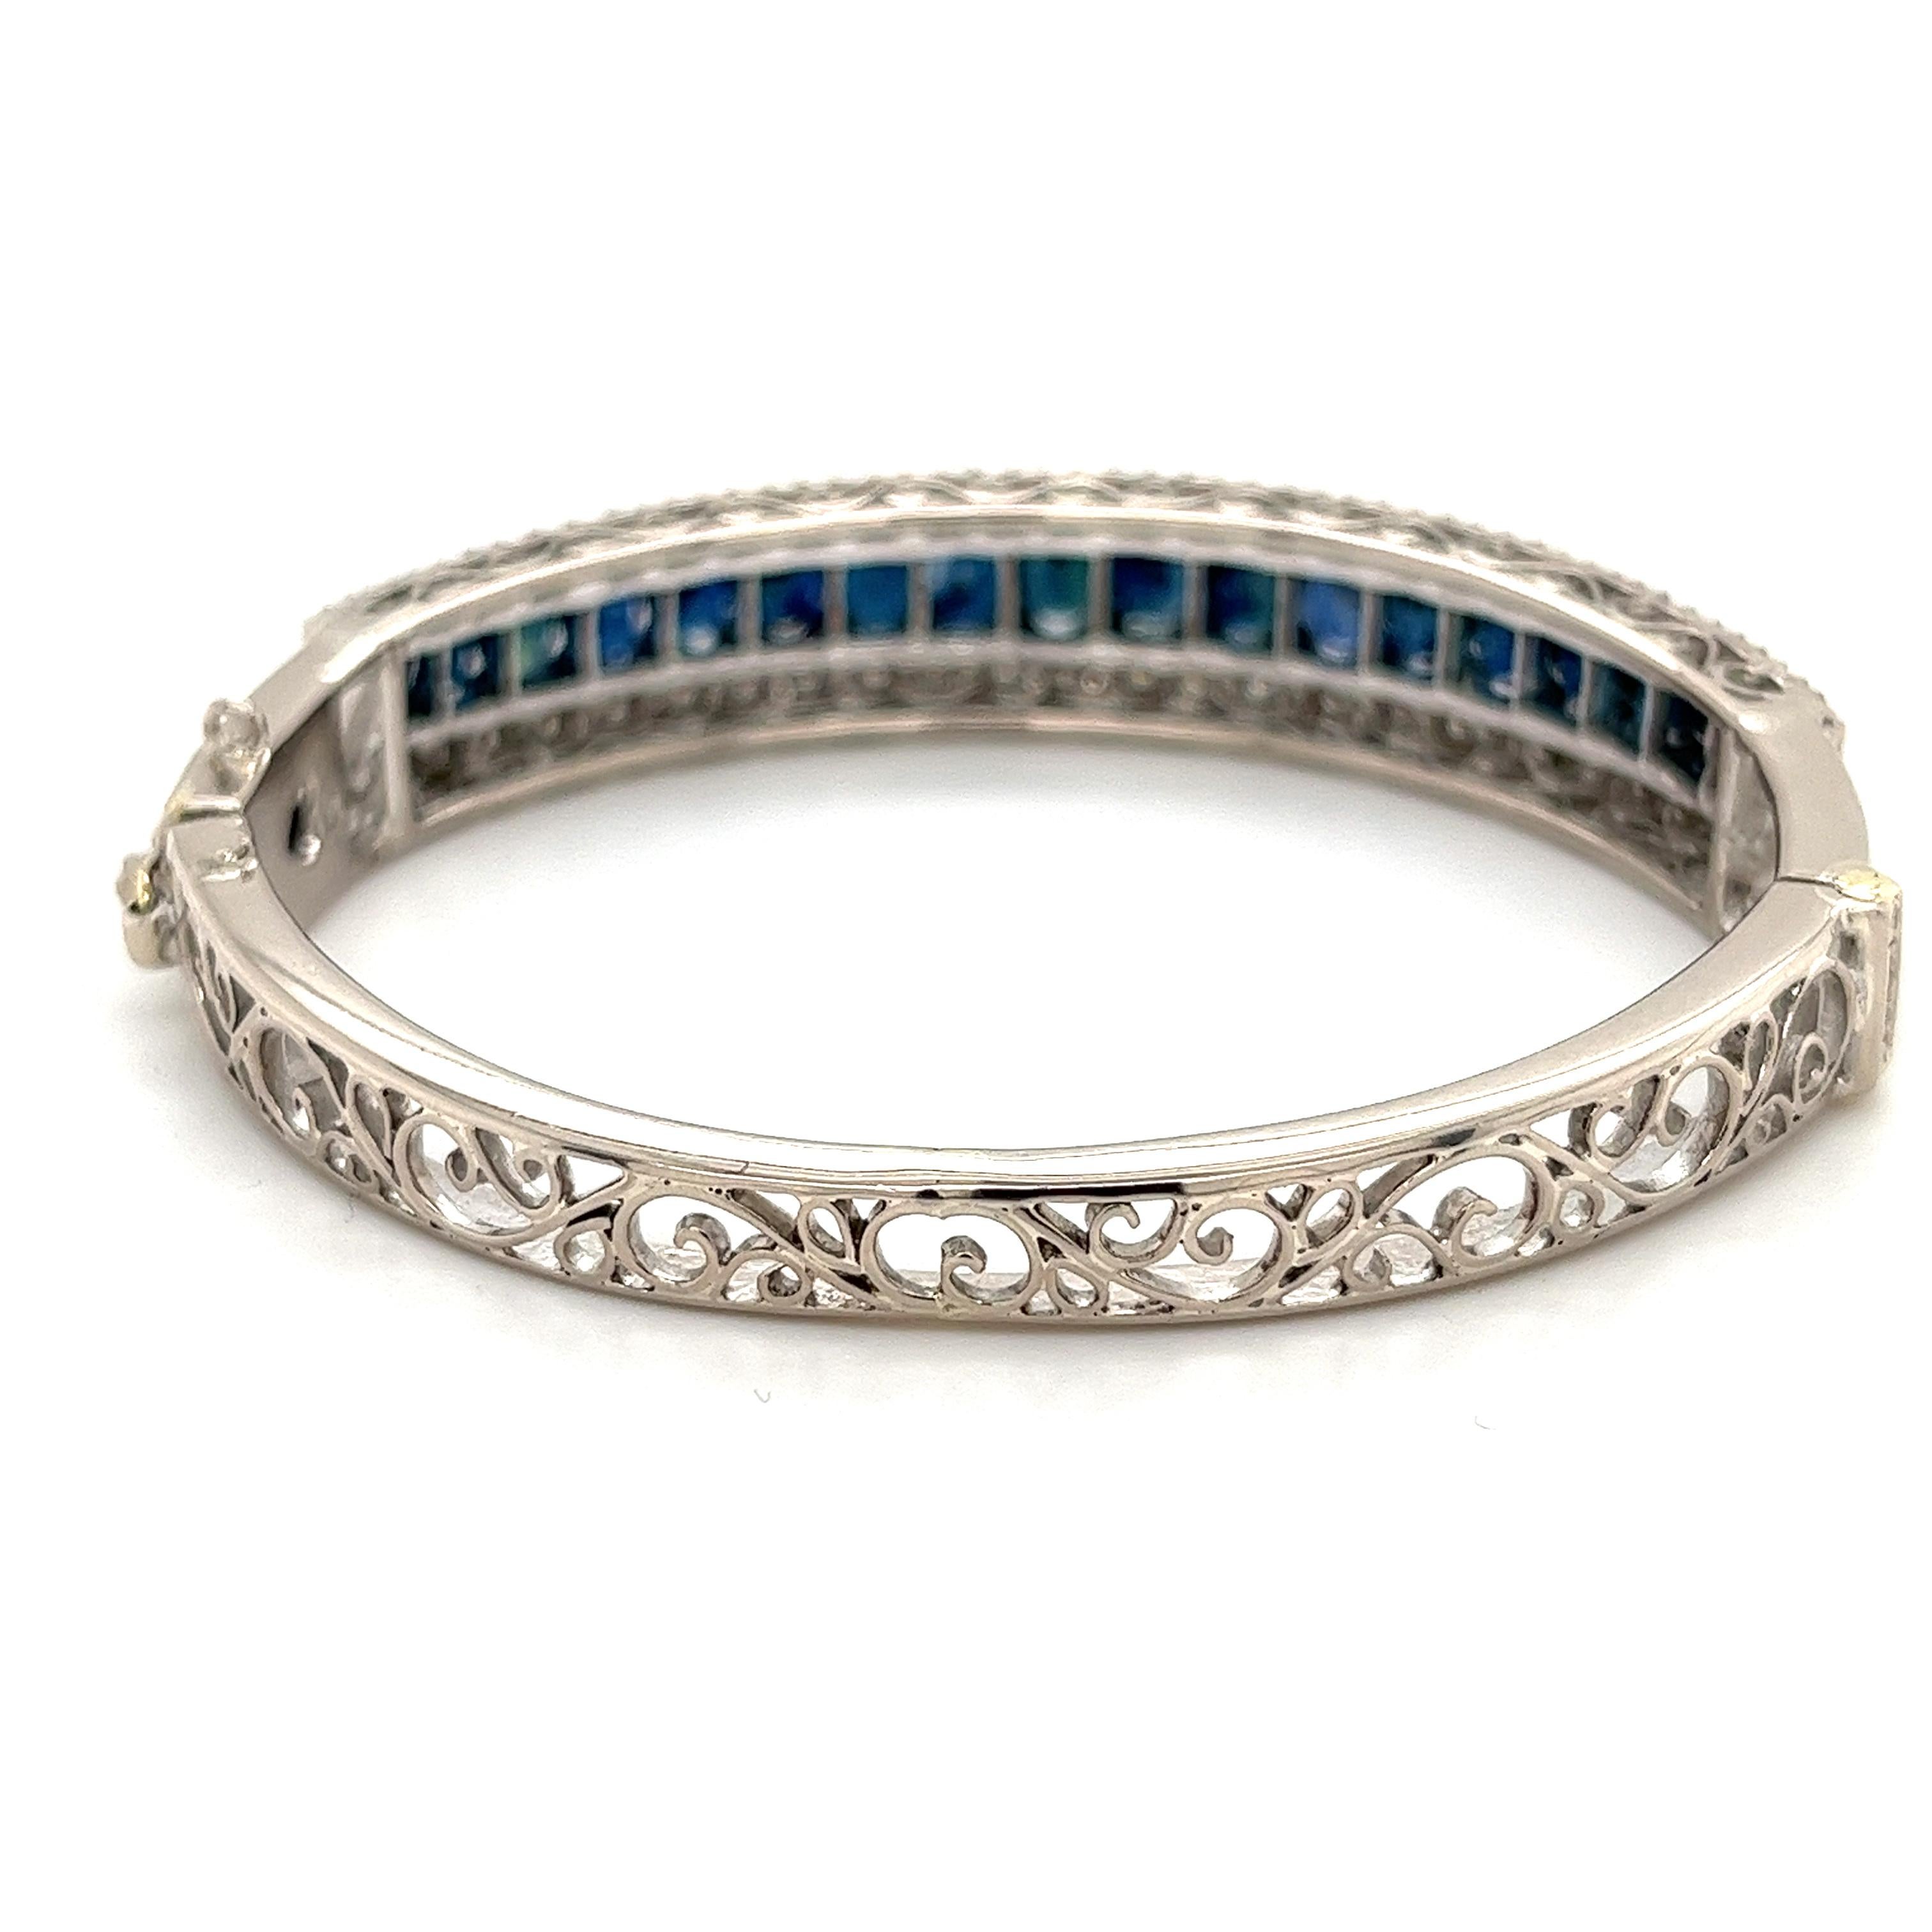 Oval Cut Vintage Art Deco Style Blue Sapphire Cluster Bangle Bracelet in 14k White Gold For Sale